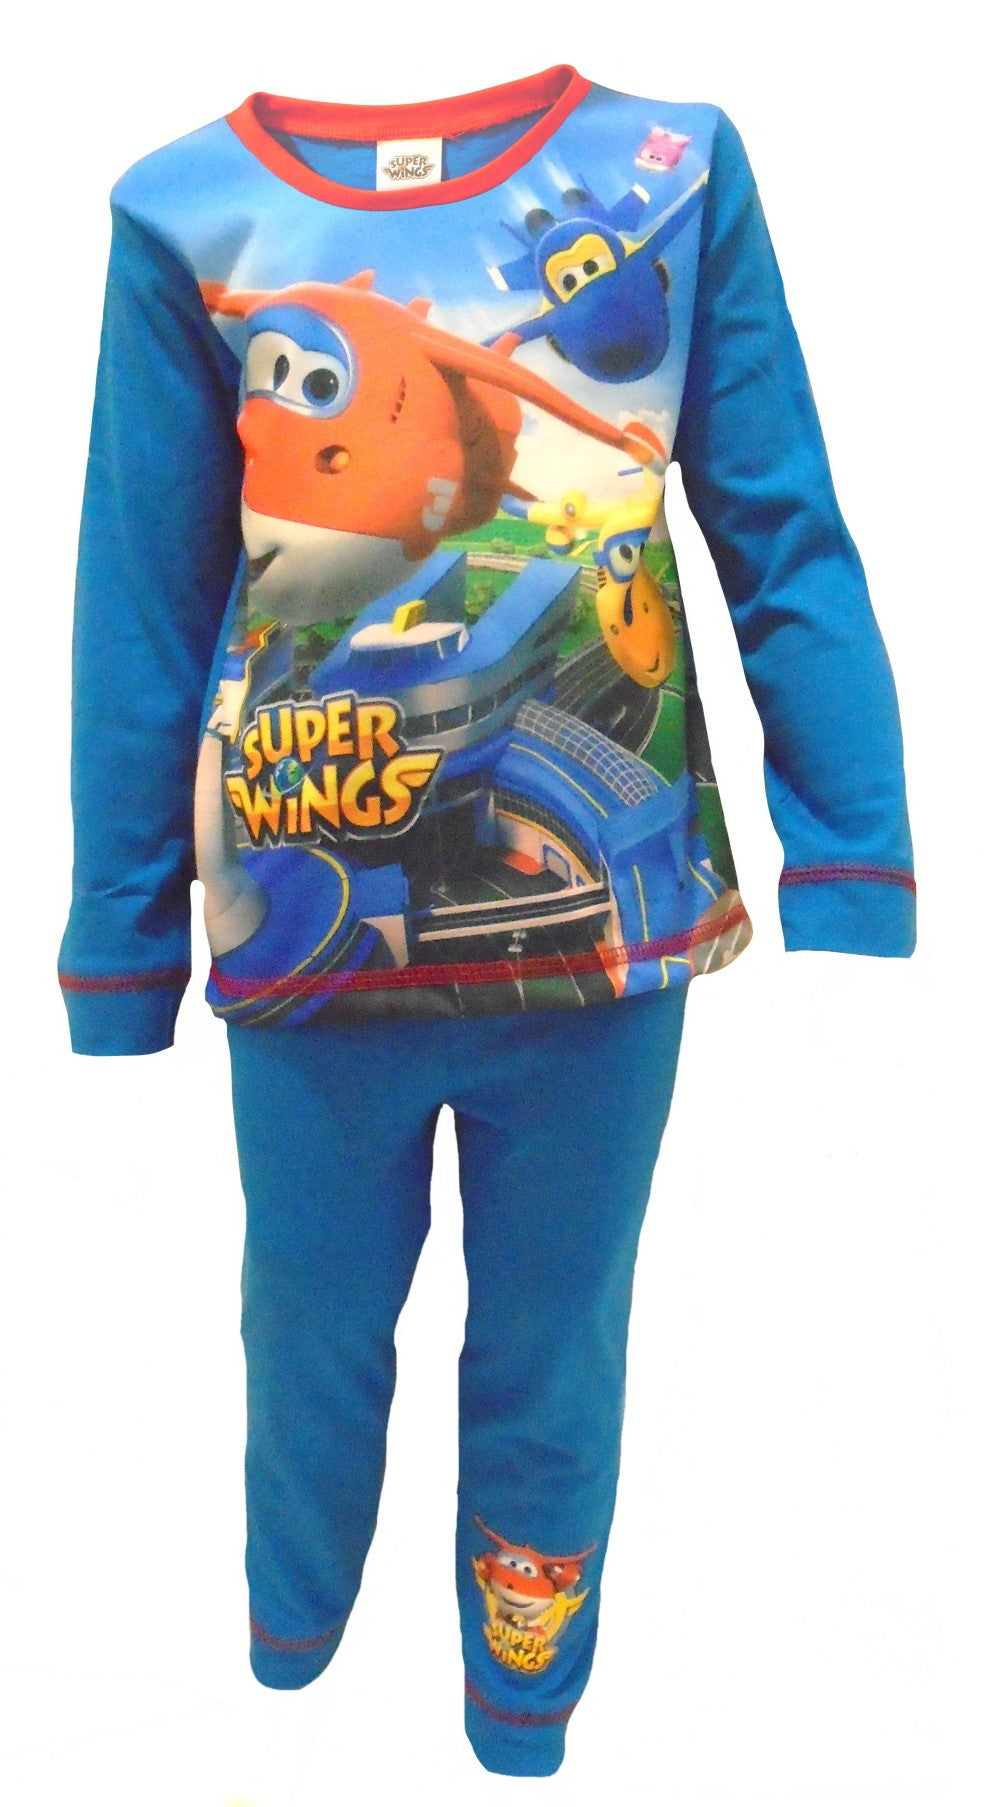 Superwings "Fly" Boys Pyjamas - 18-24 Months